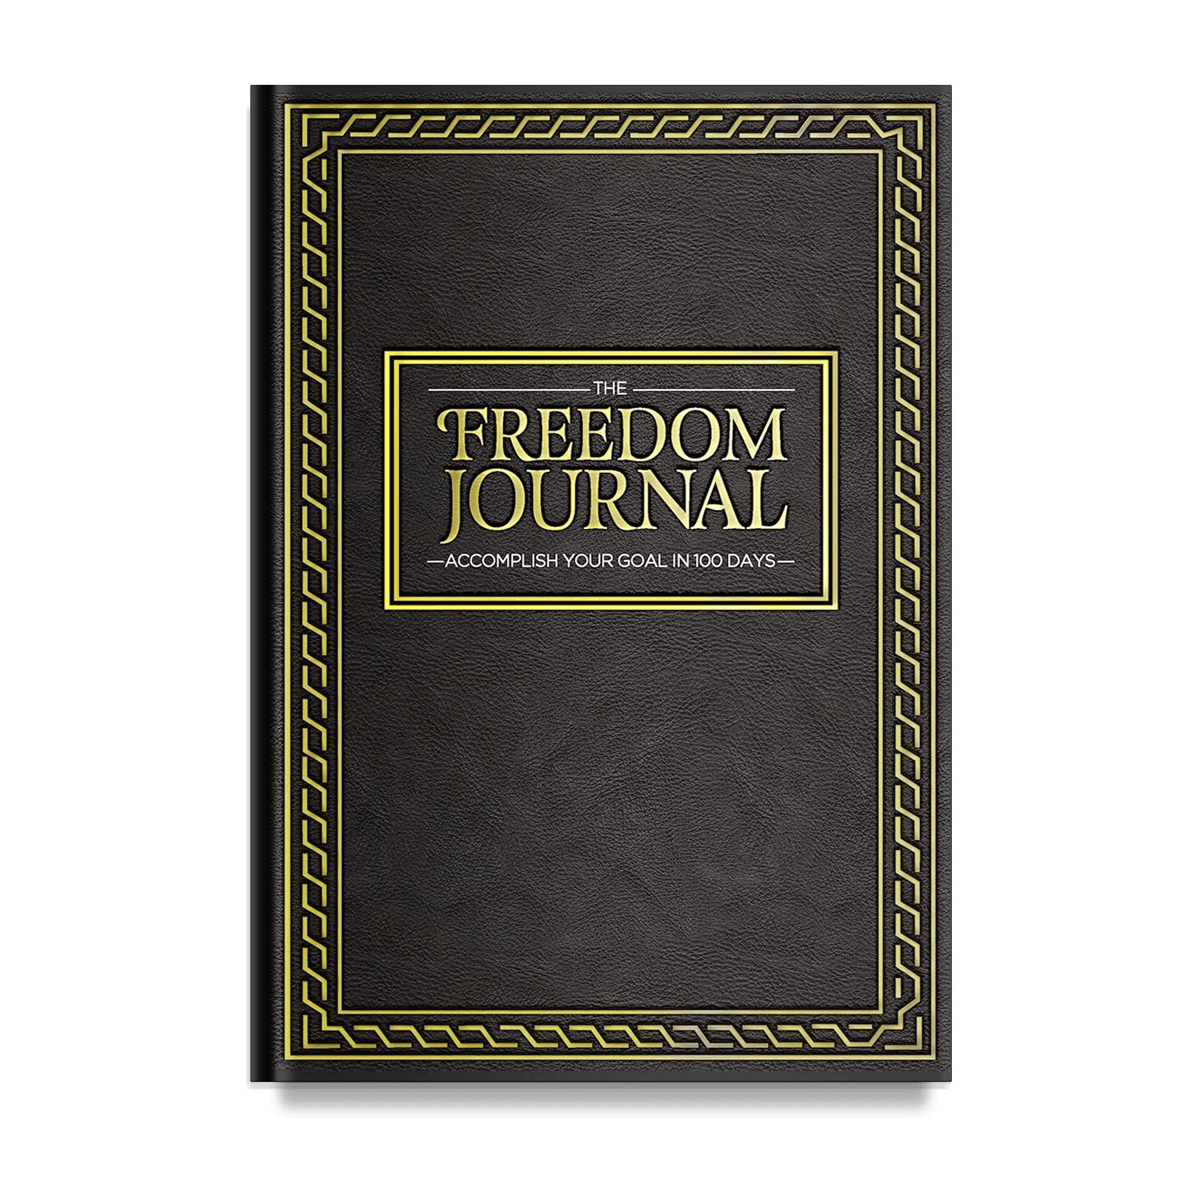 The Freedom Journal by John Lee Dumas